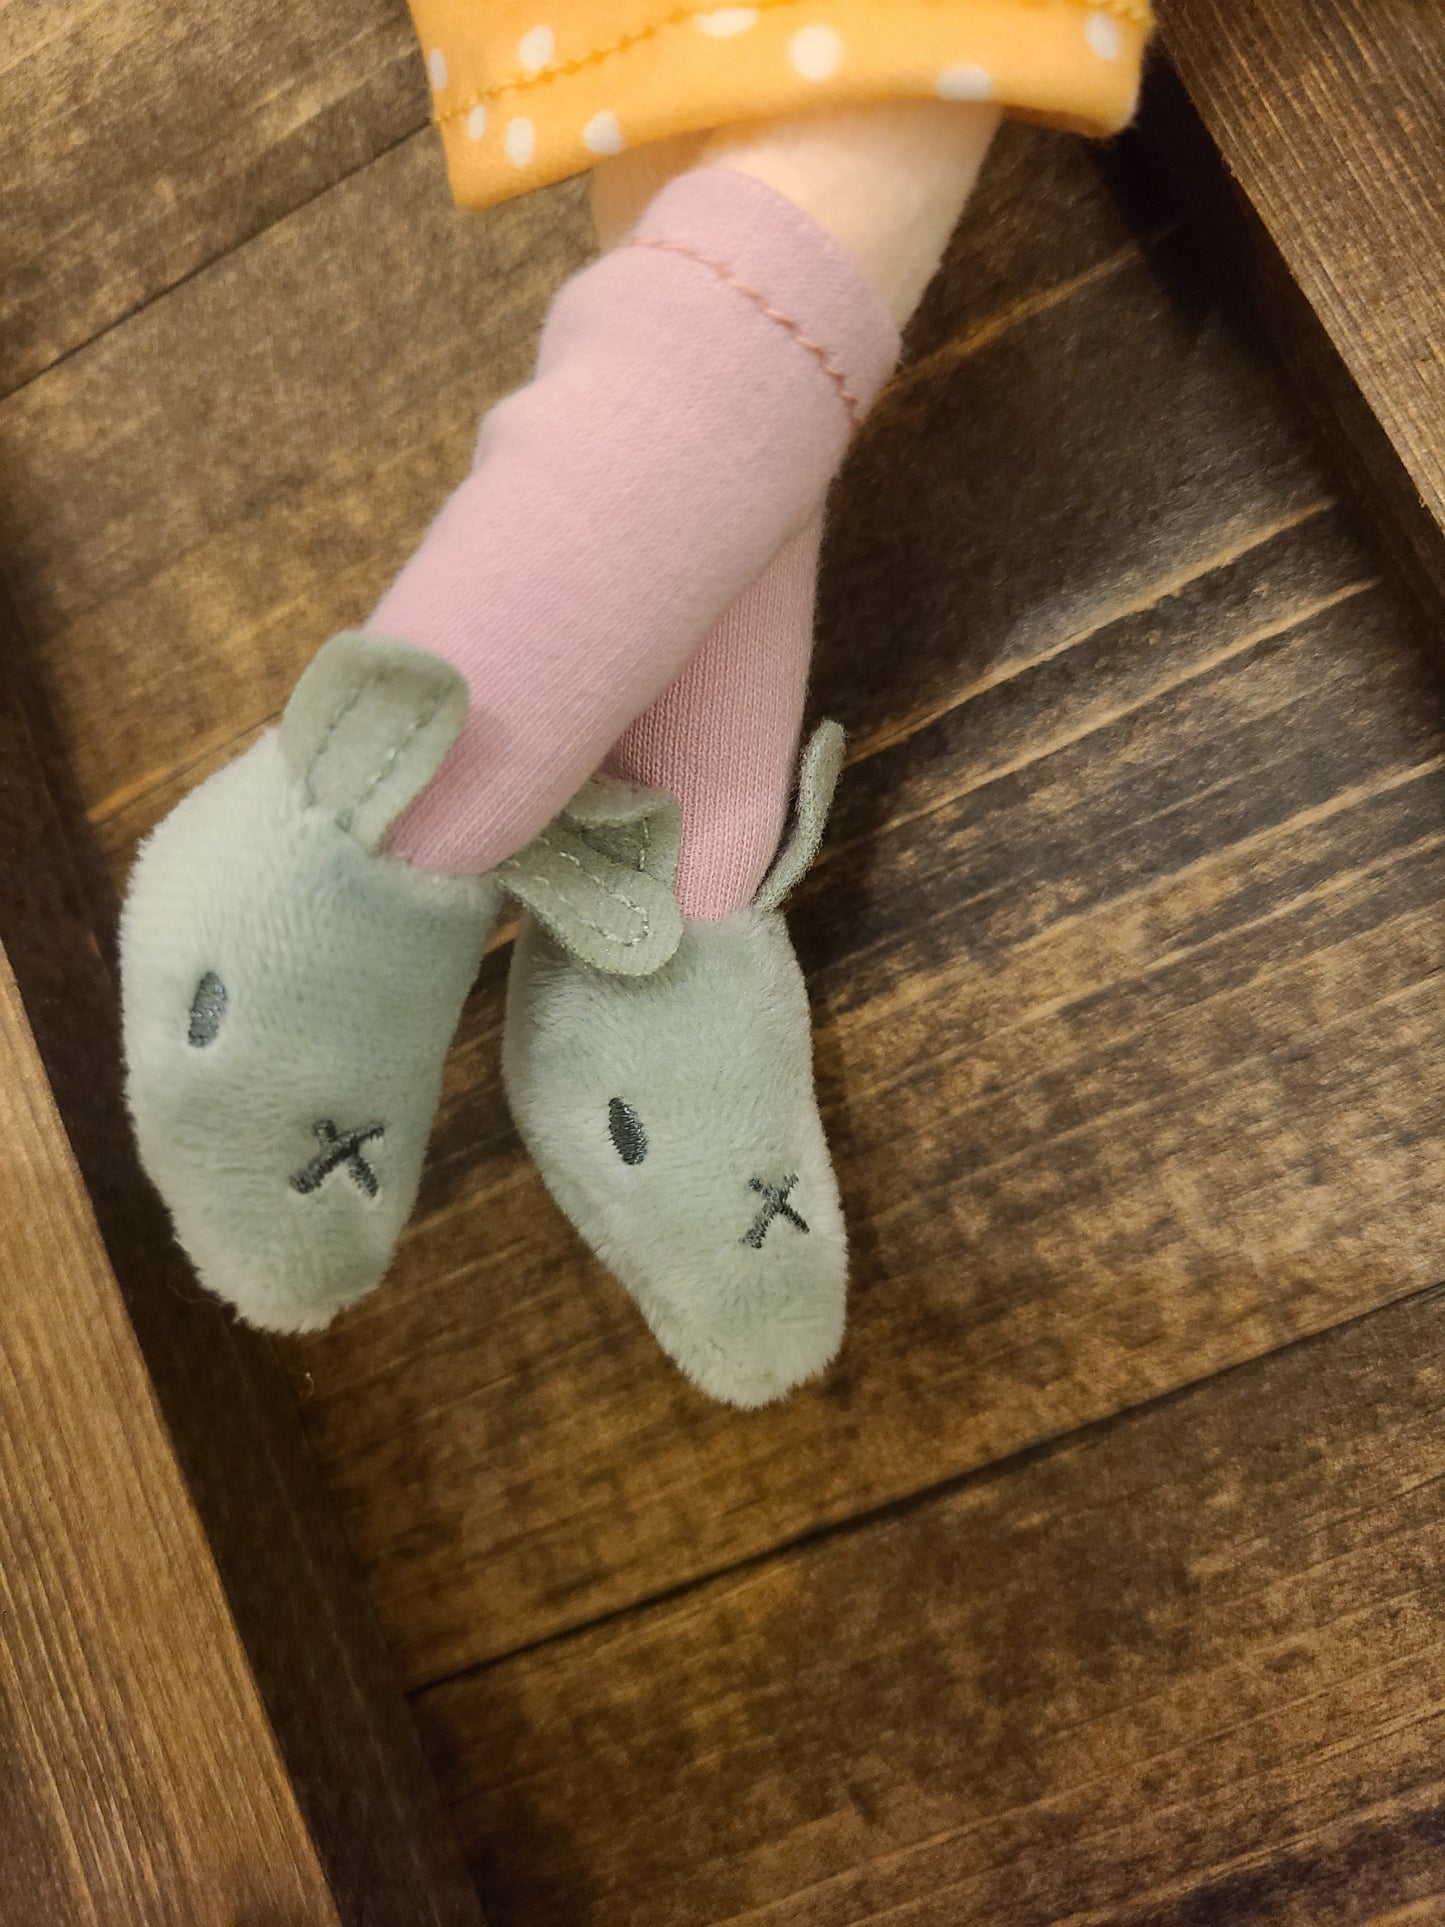 Personalized Soft Rag 13in Little Sophia+ Monkey Plush Doll Toy/ Baby Gift Toy